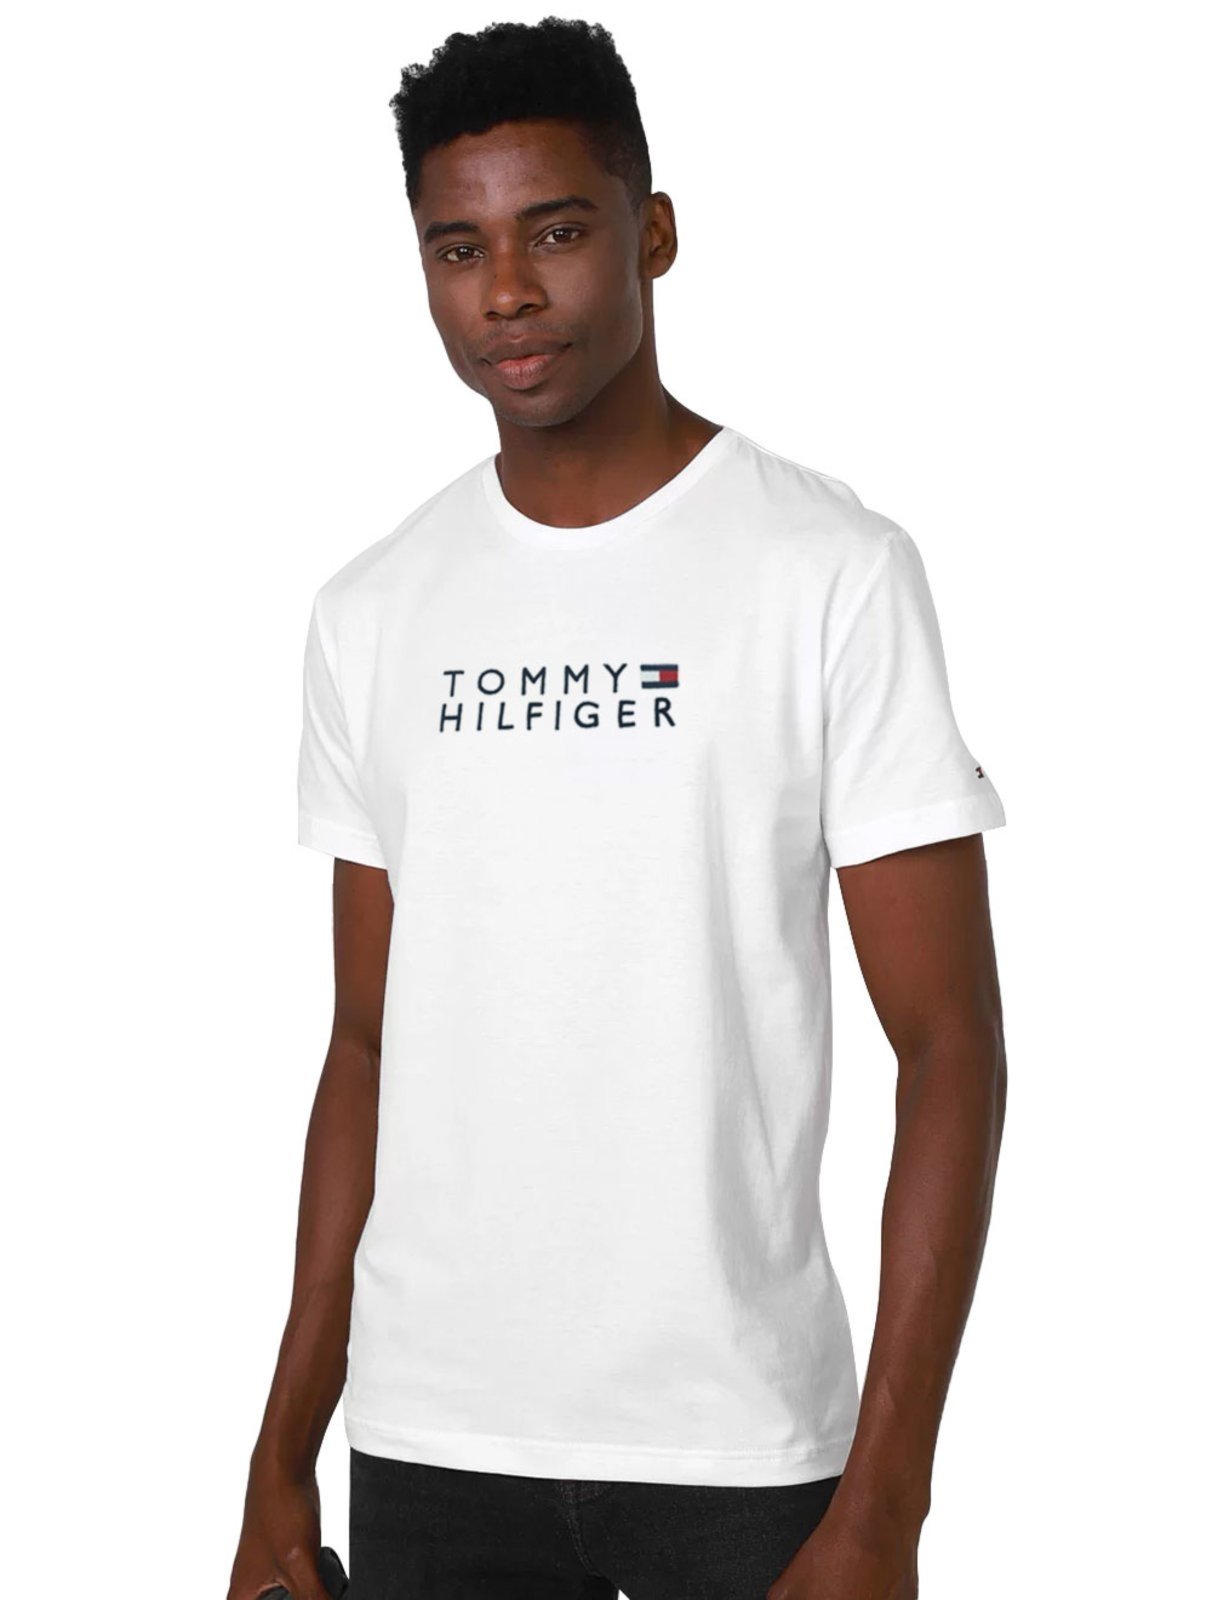 https://static.dafiti.com.br/p/Tommy-Hilfiger-Camiseta-Tommy-Hilfiger-Masculina-Big-Large-Logo-Branca-2930-90144821-1-zoom.jpg